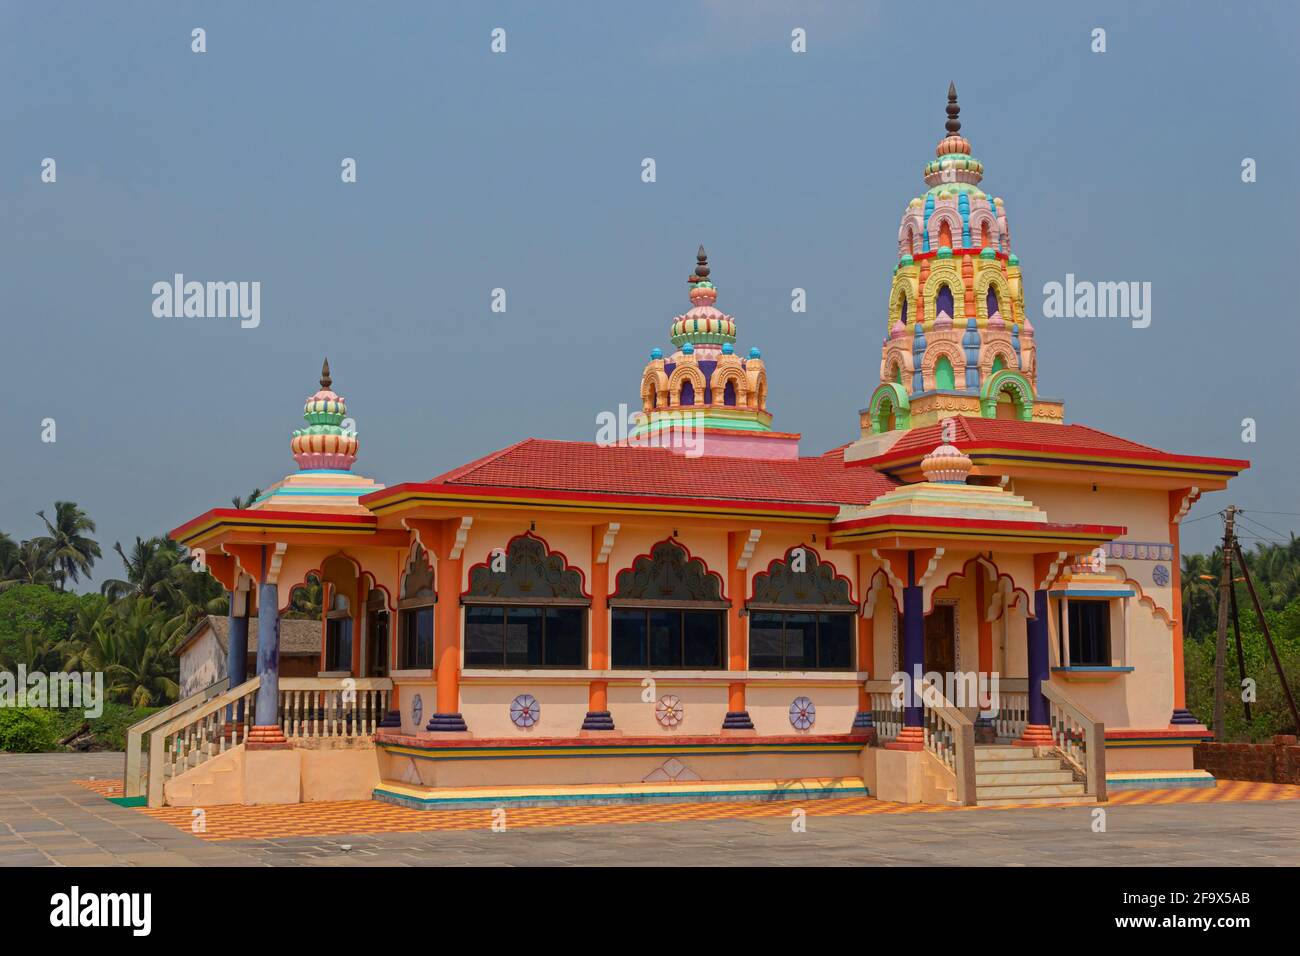 Pavan And JH Sea Breeze in Guhagar, Ratnagiri | Find Price, Gallery, Plans,  Amenities on CommonFloor.com